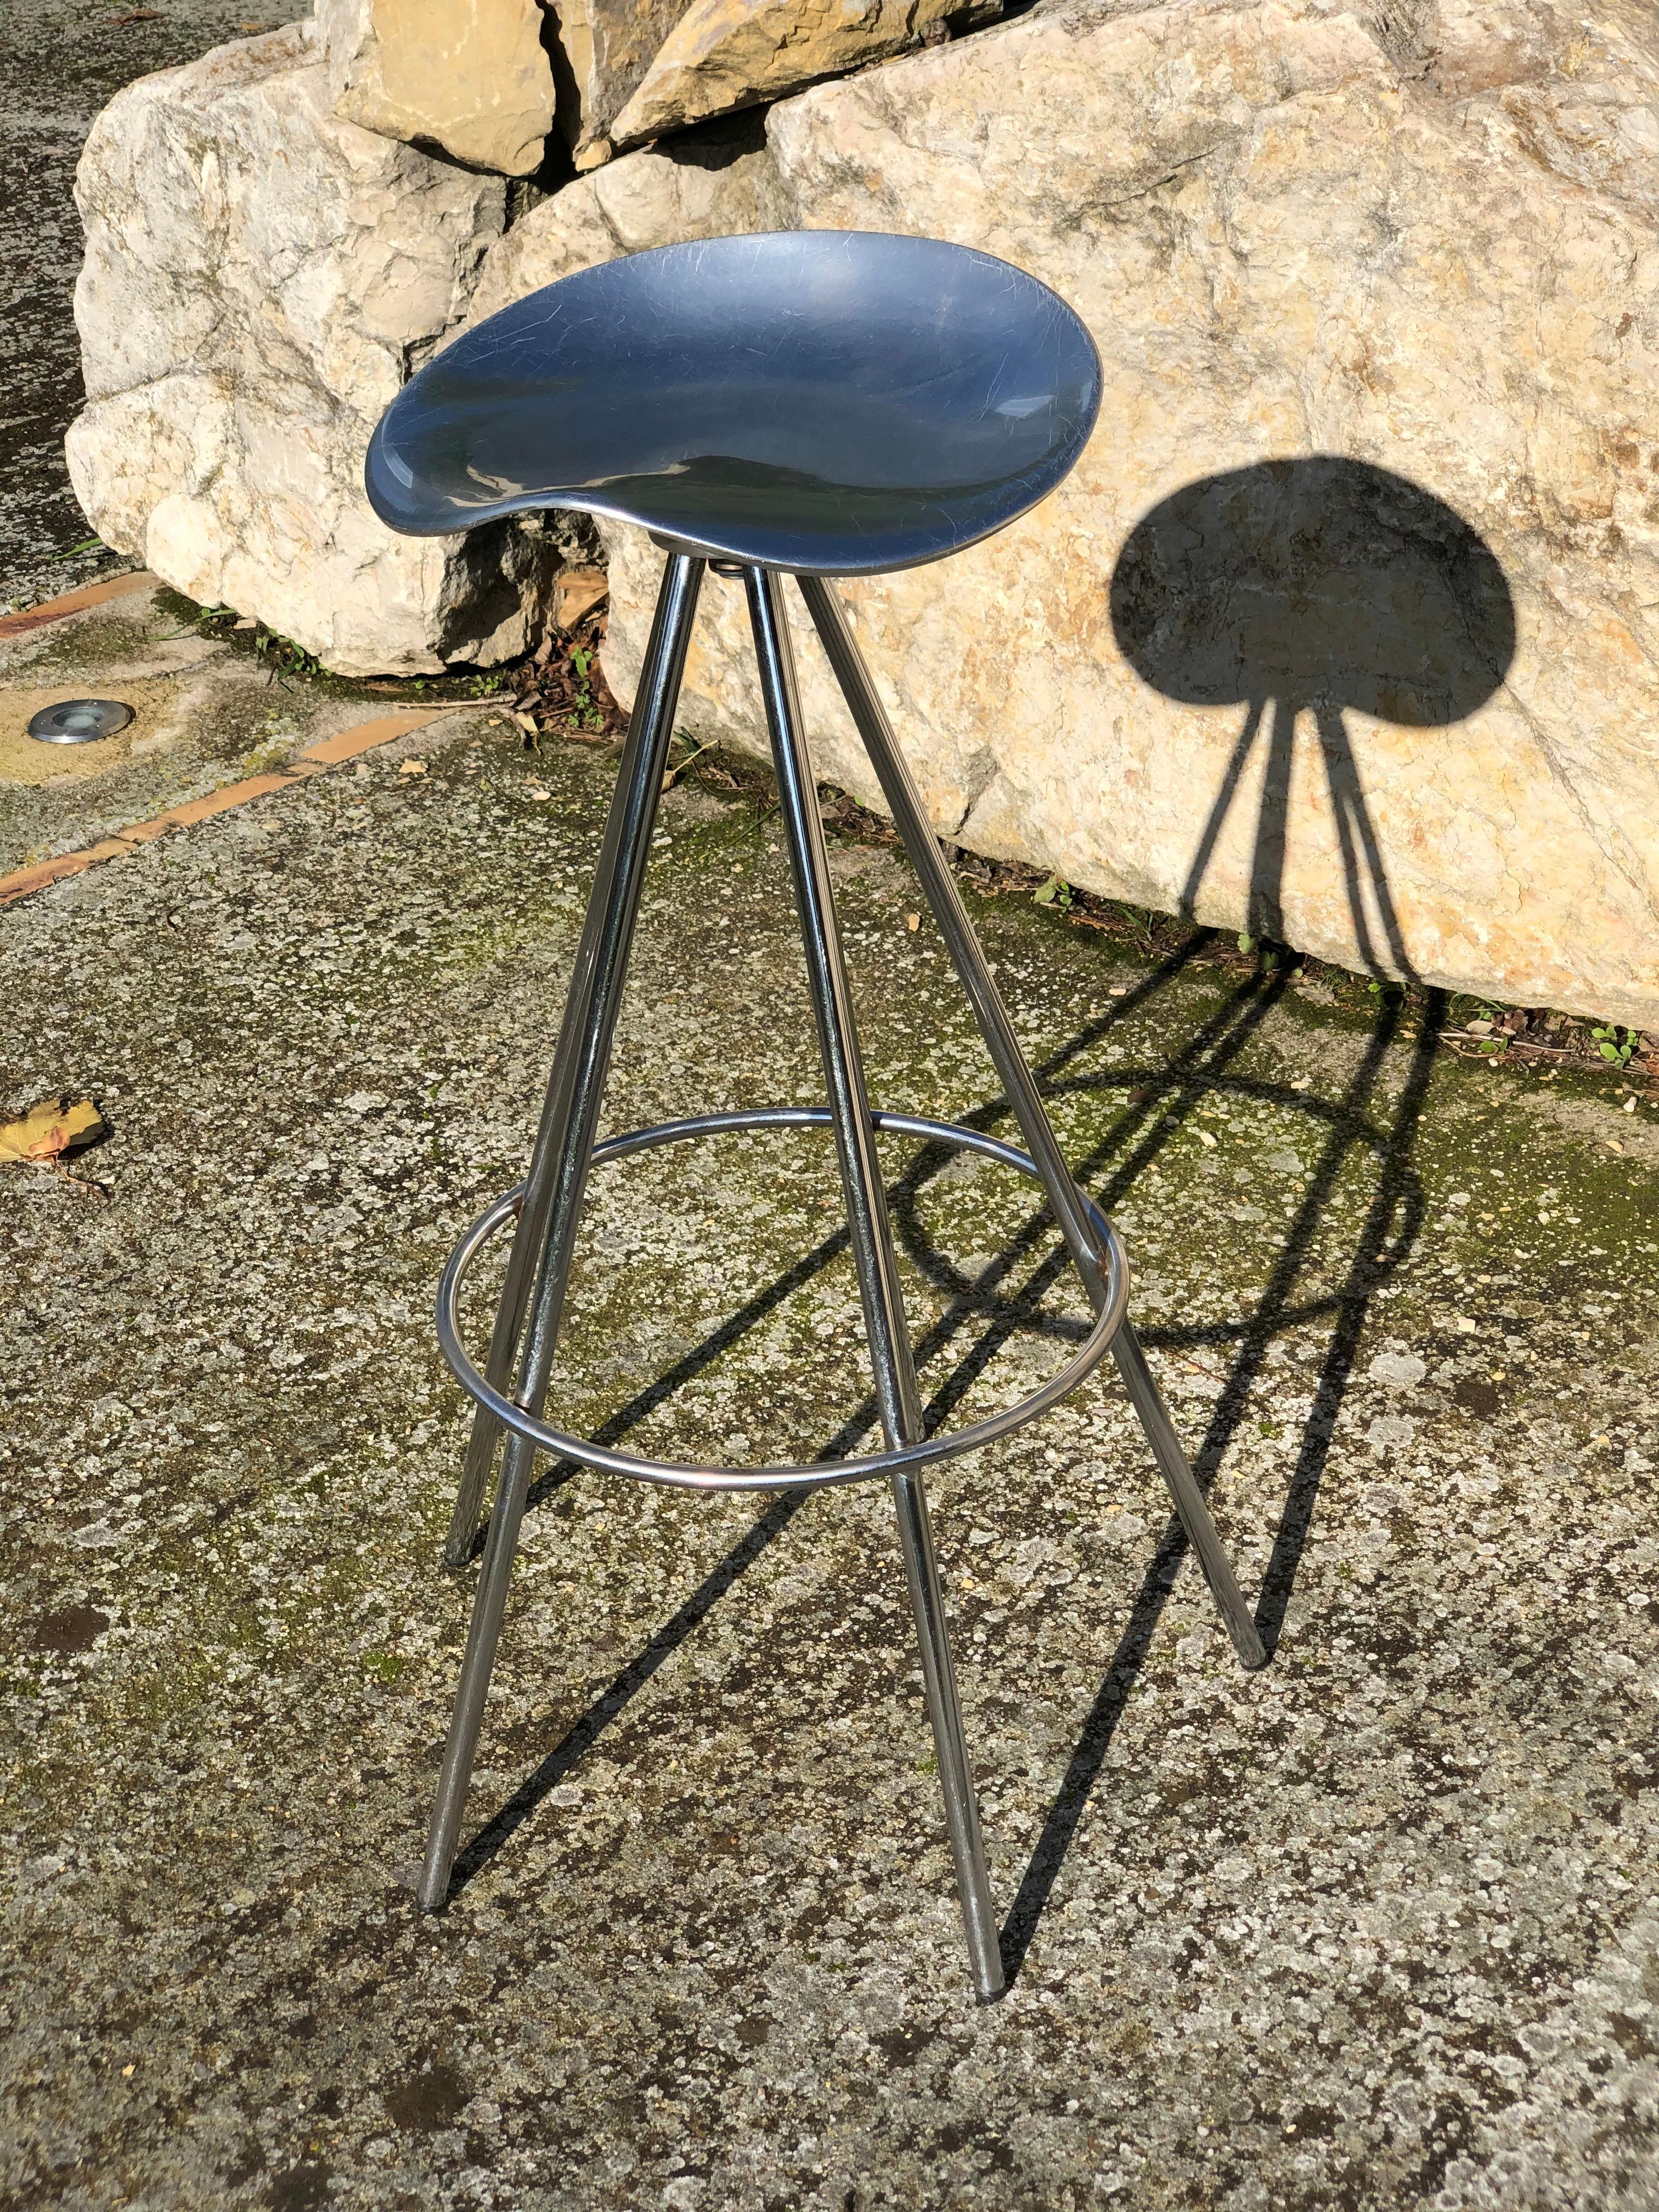 Set of 4 Pepé Cortes stools aluminum and chrome model Jamaïca edition Amat, 1990
(6 pieces is possible).